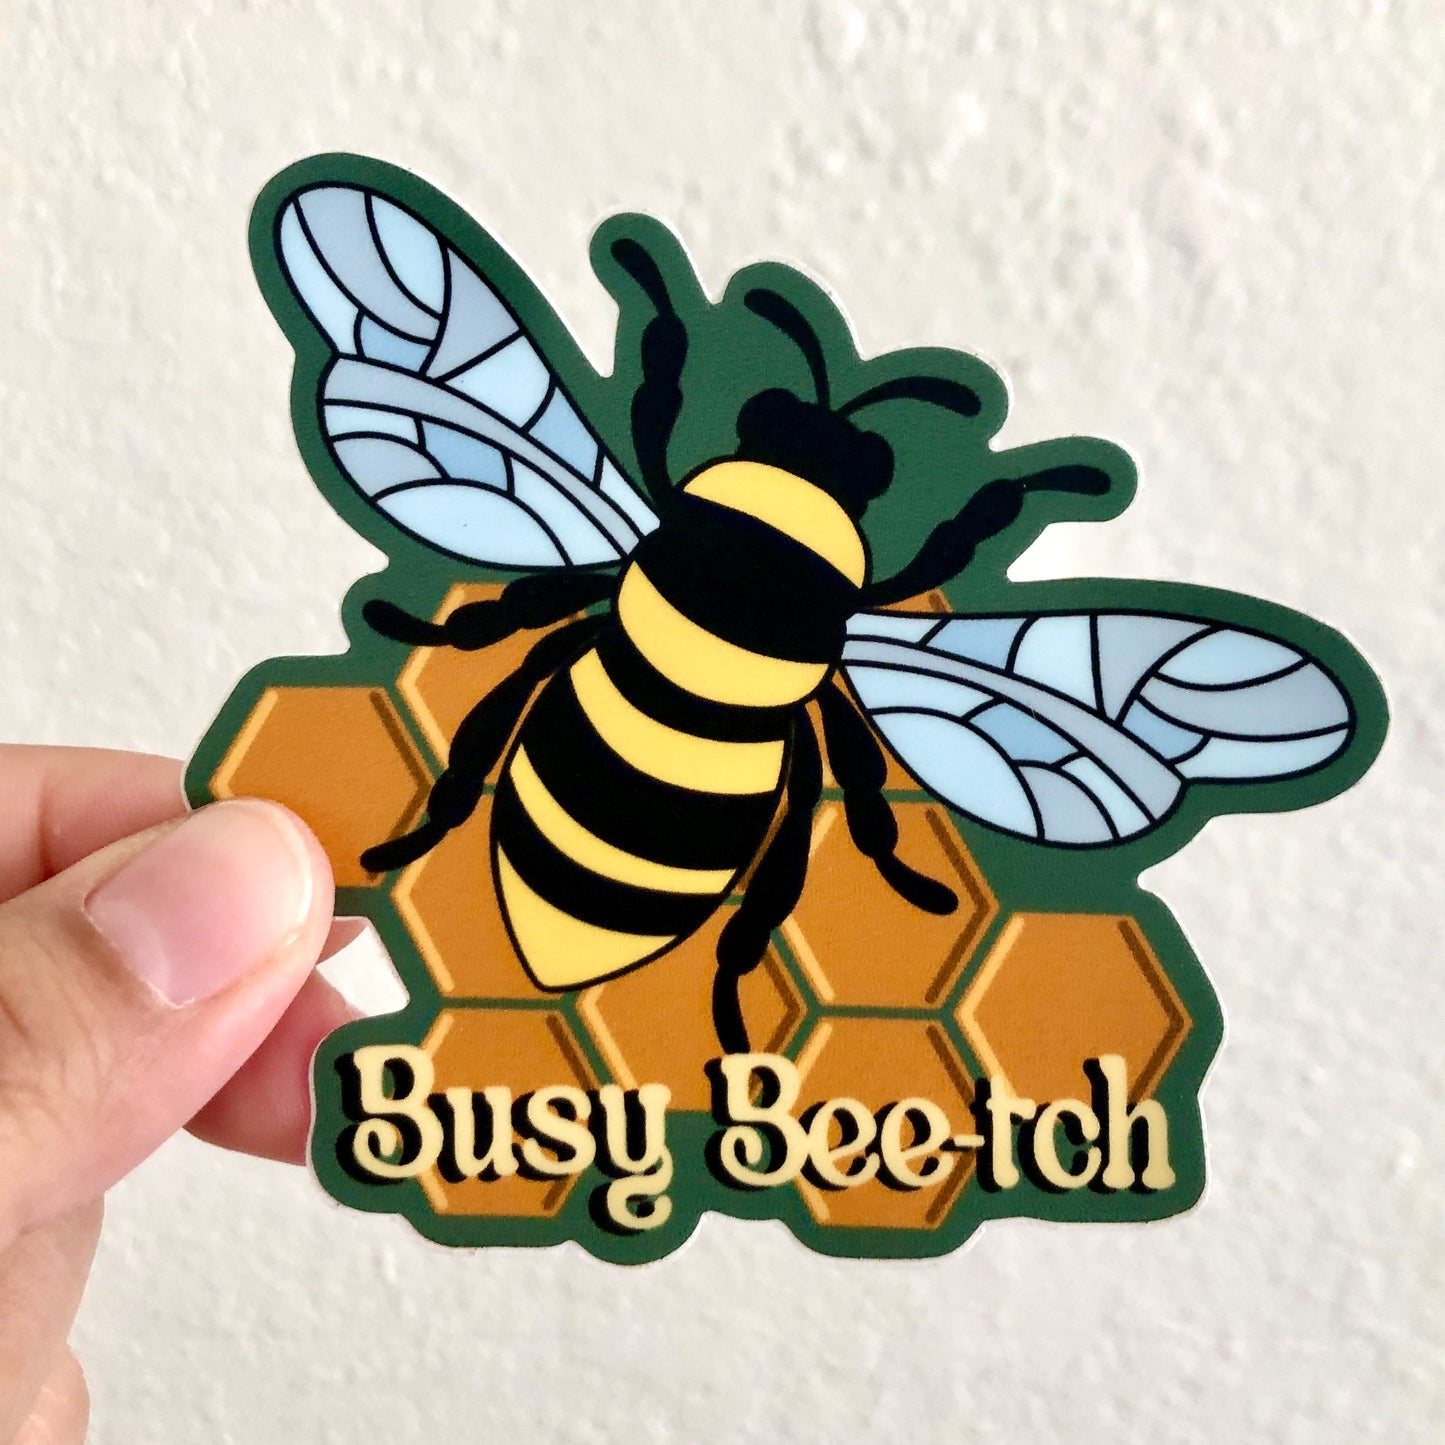 Busy Bee-tch Vinyl Sticker